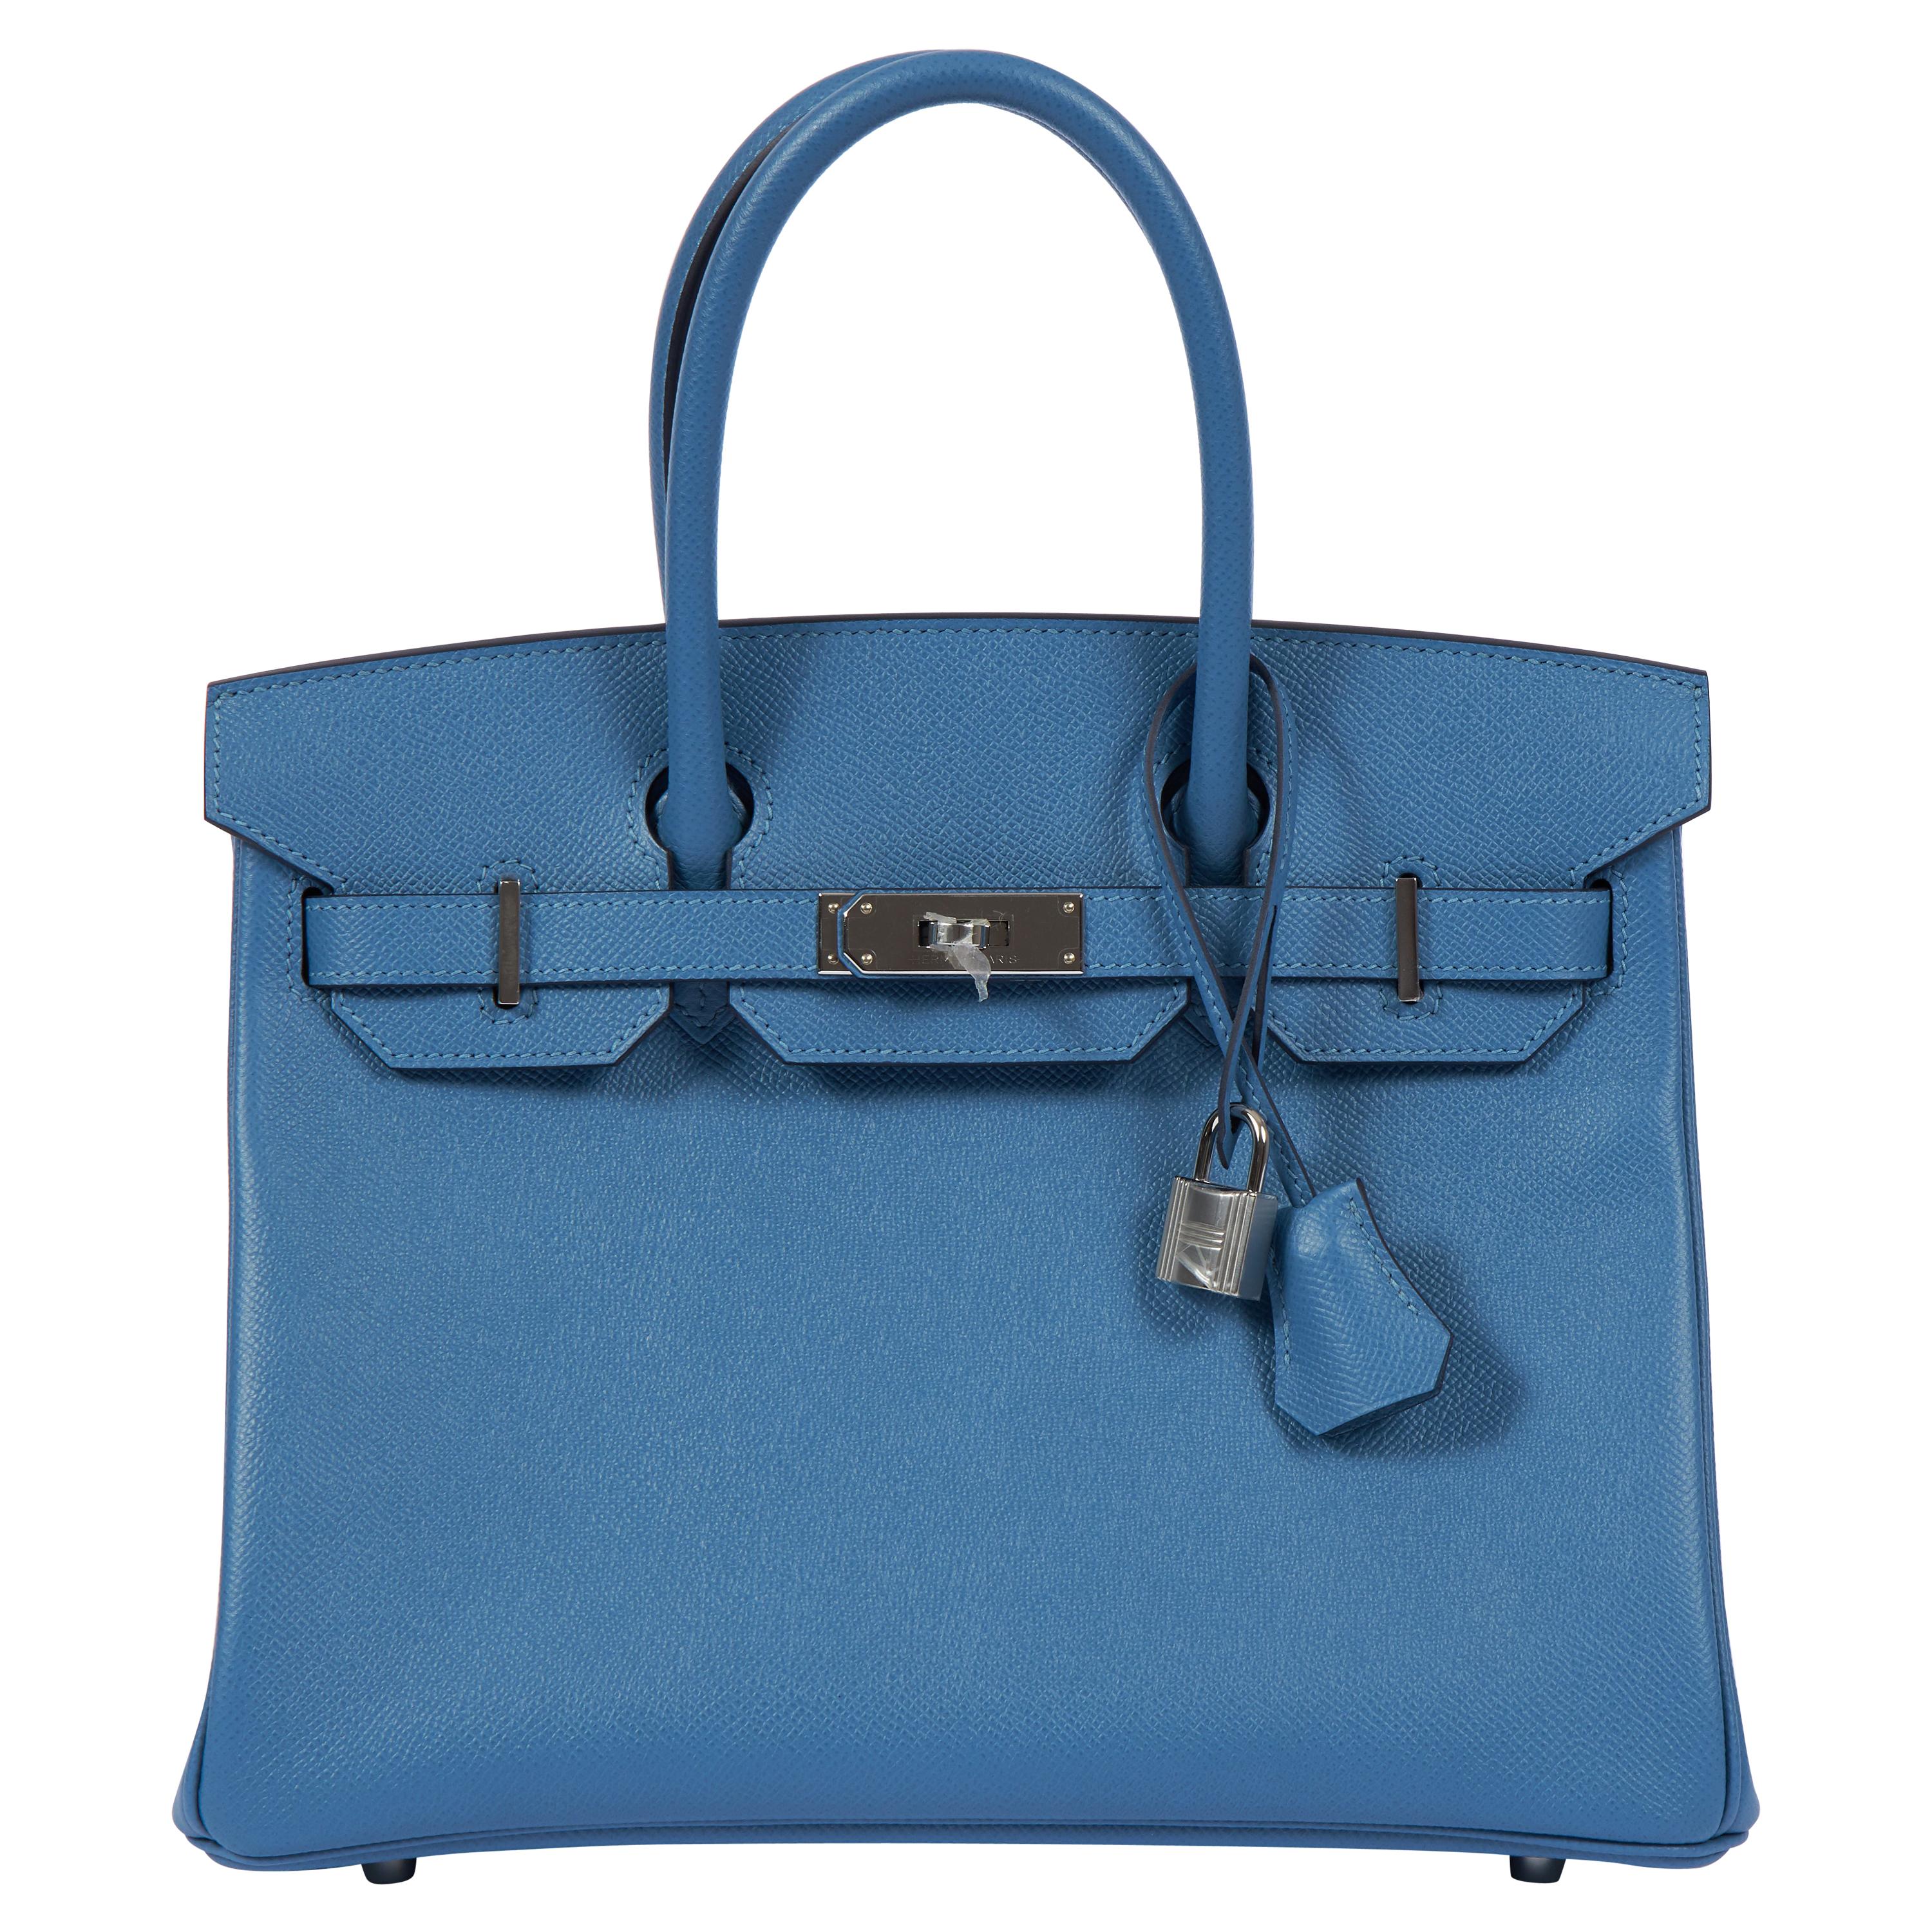 NEW 2018 Hermès 30cm Blue Azur Palladium Birkin Bag in Box